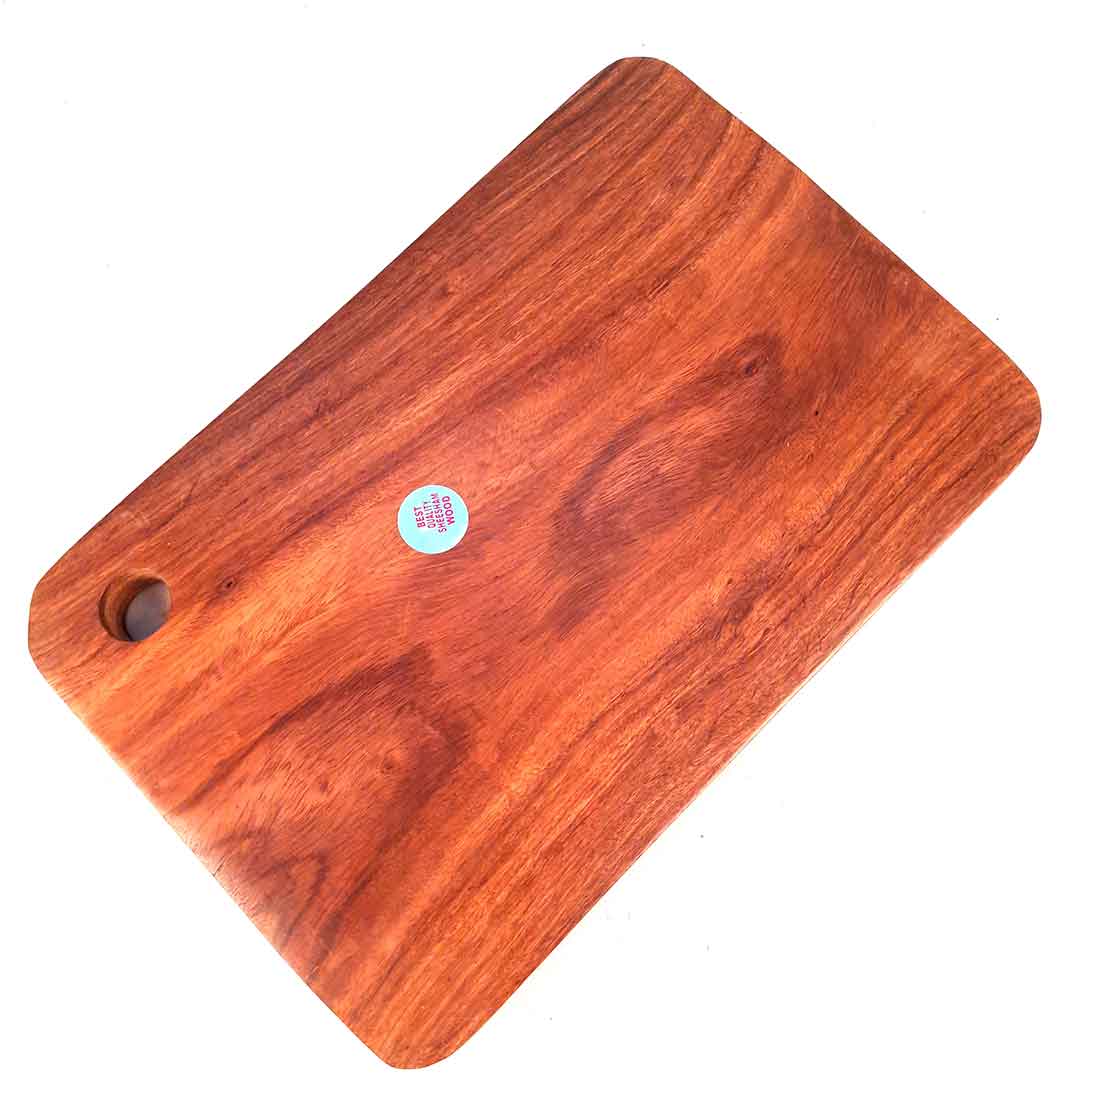 Wooden Chopping Board | Cutting Board For Home & Kitchen - 13 Inch - ApkaMart